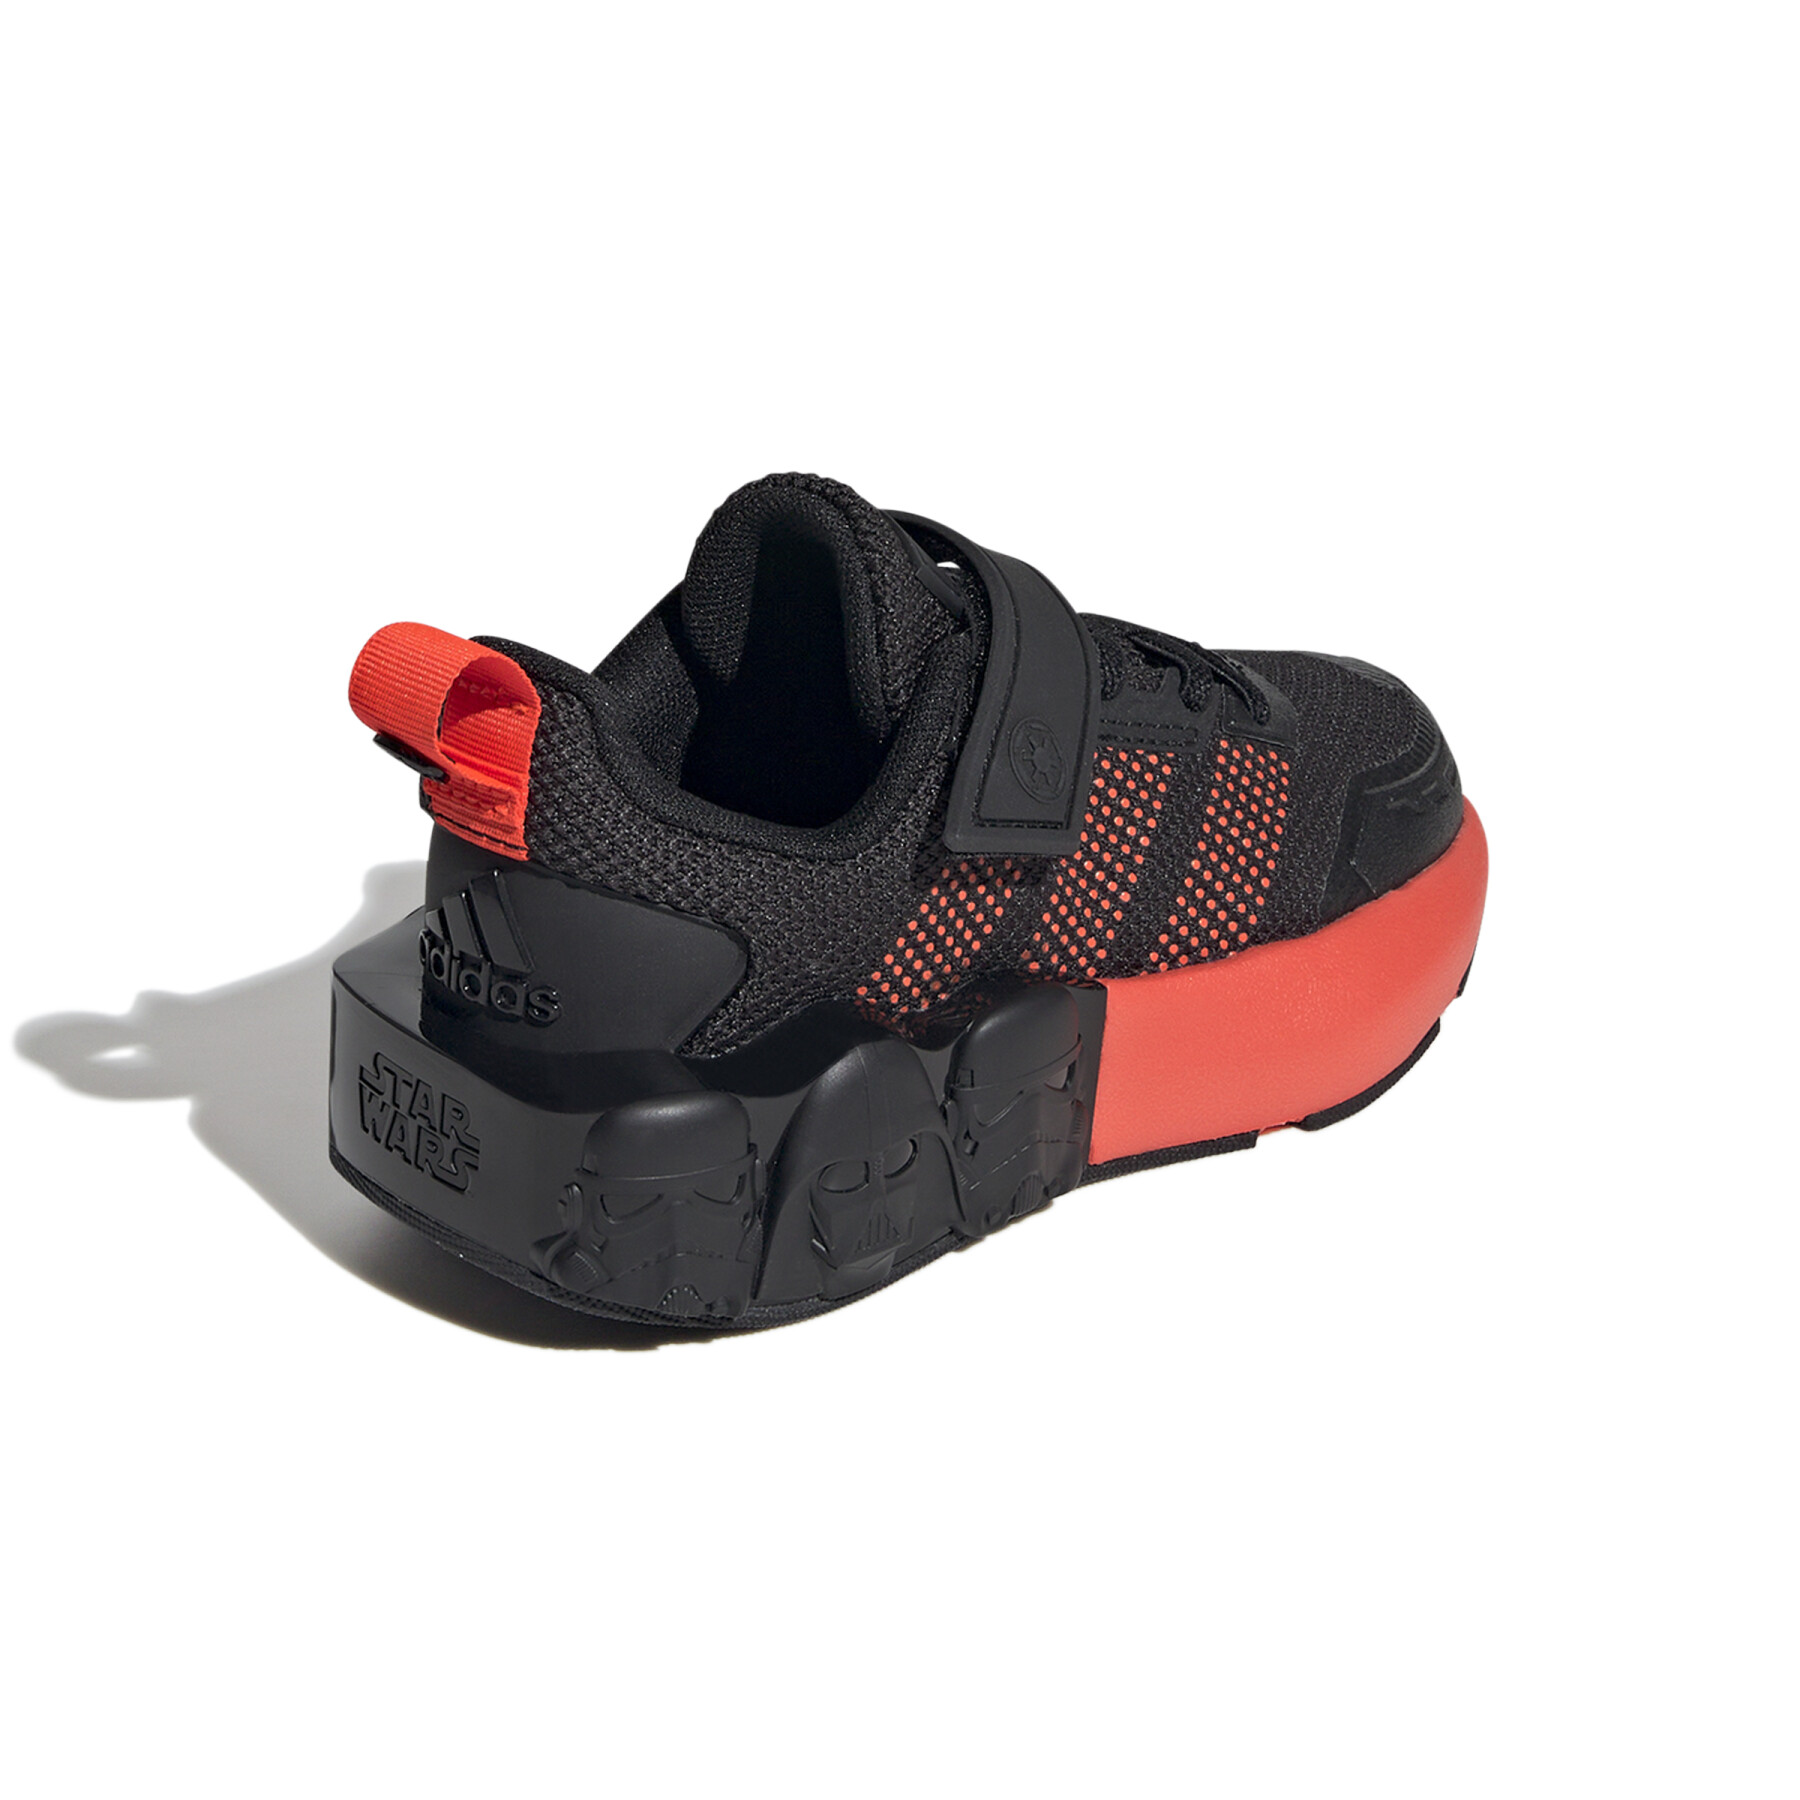 Sneakers per bambini adidas Star Wars